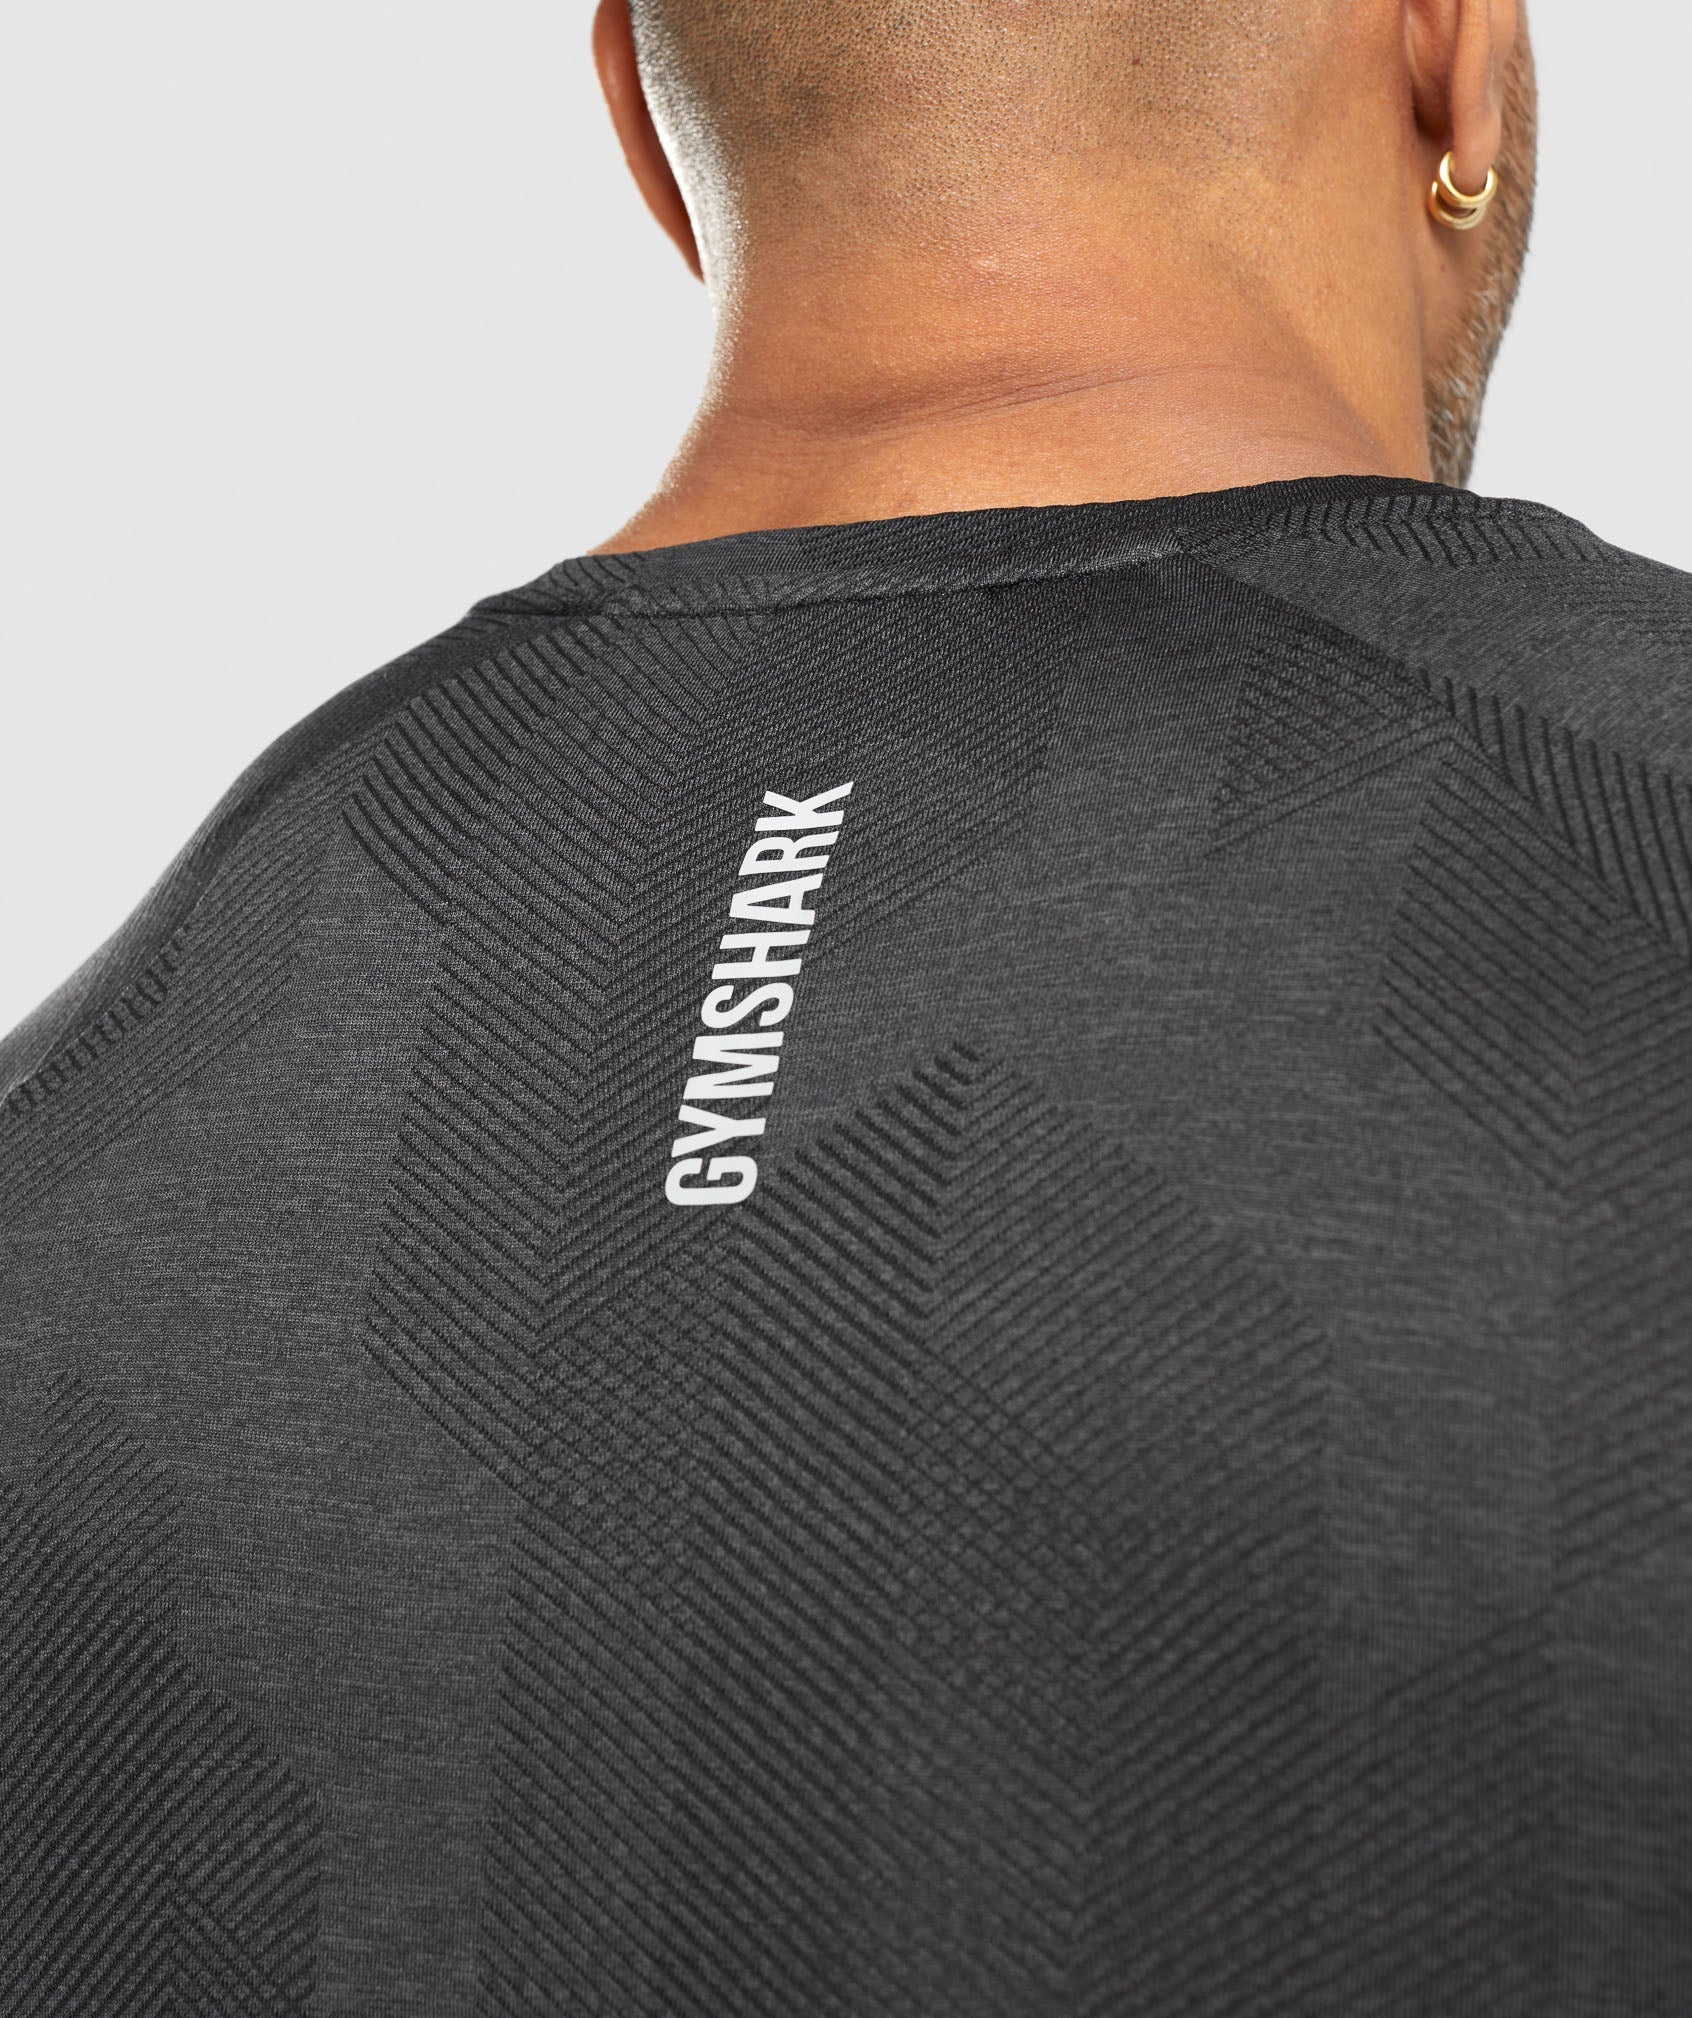 Apex T-Shirt in Black/Onyx Grey - view 7